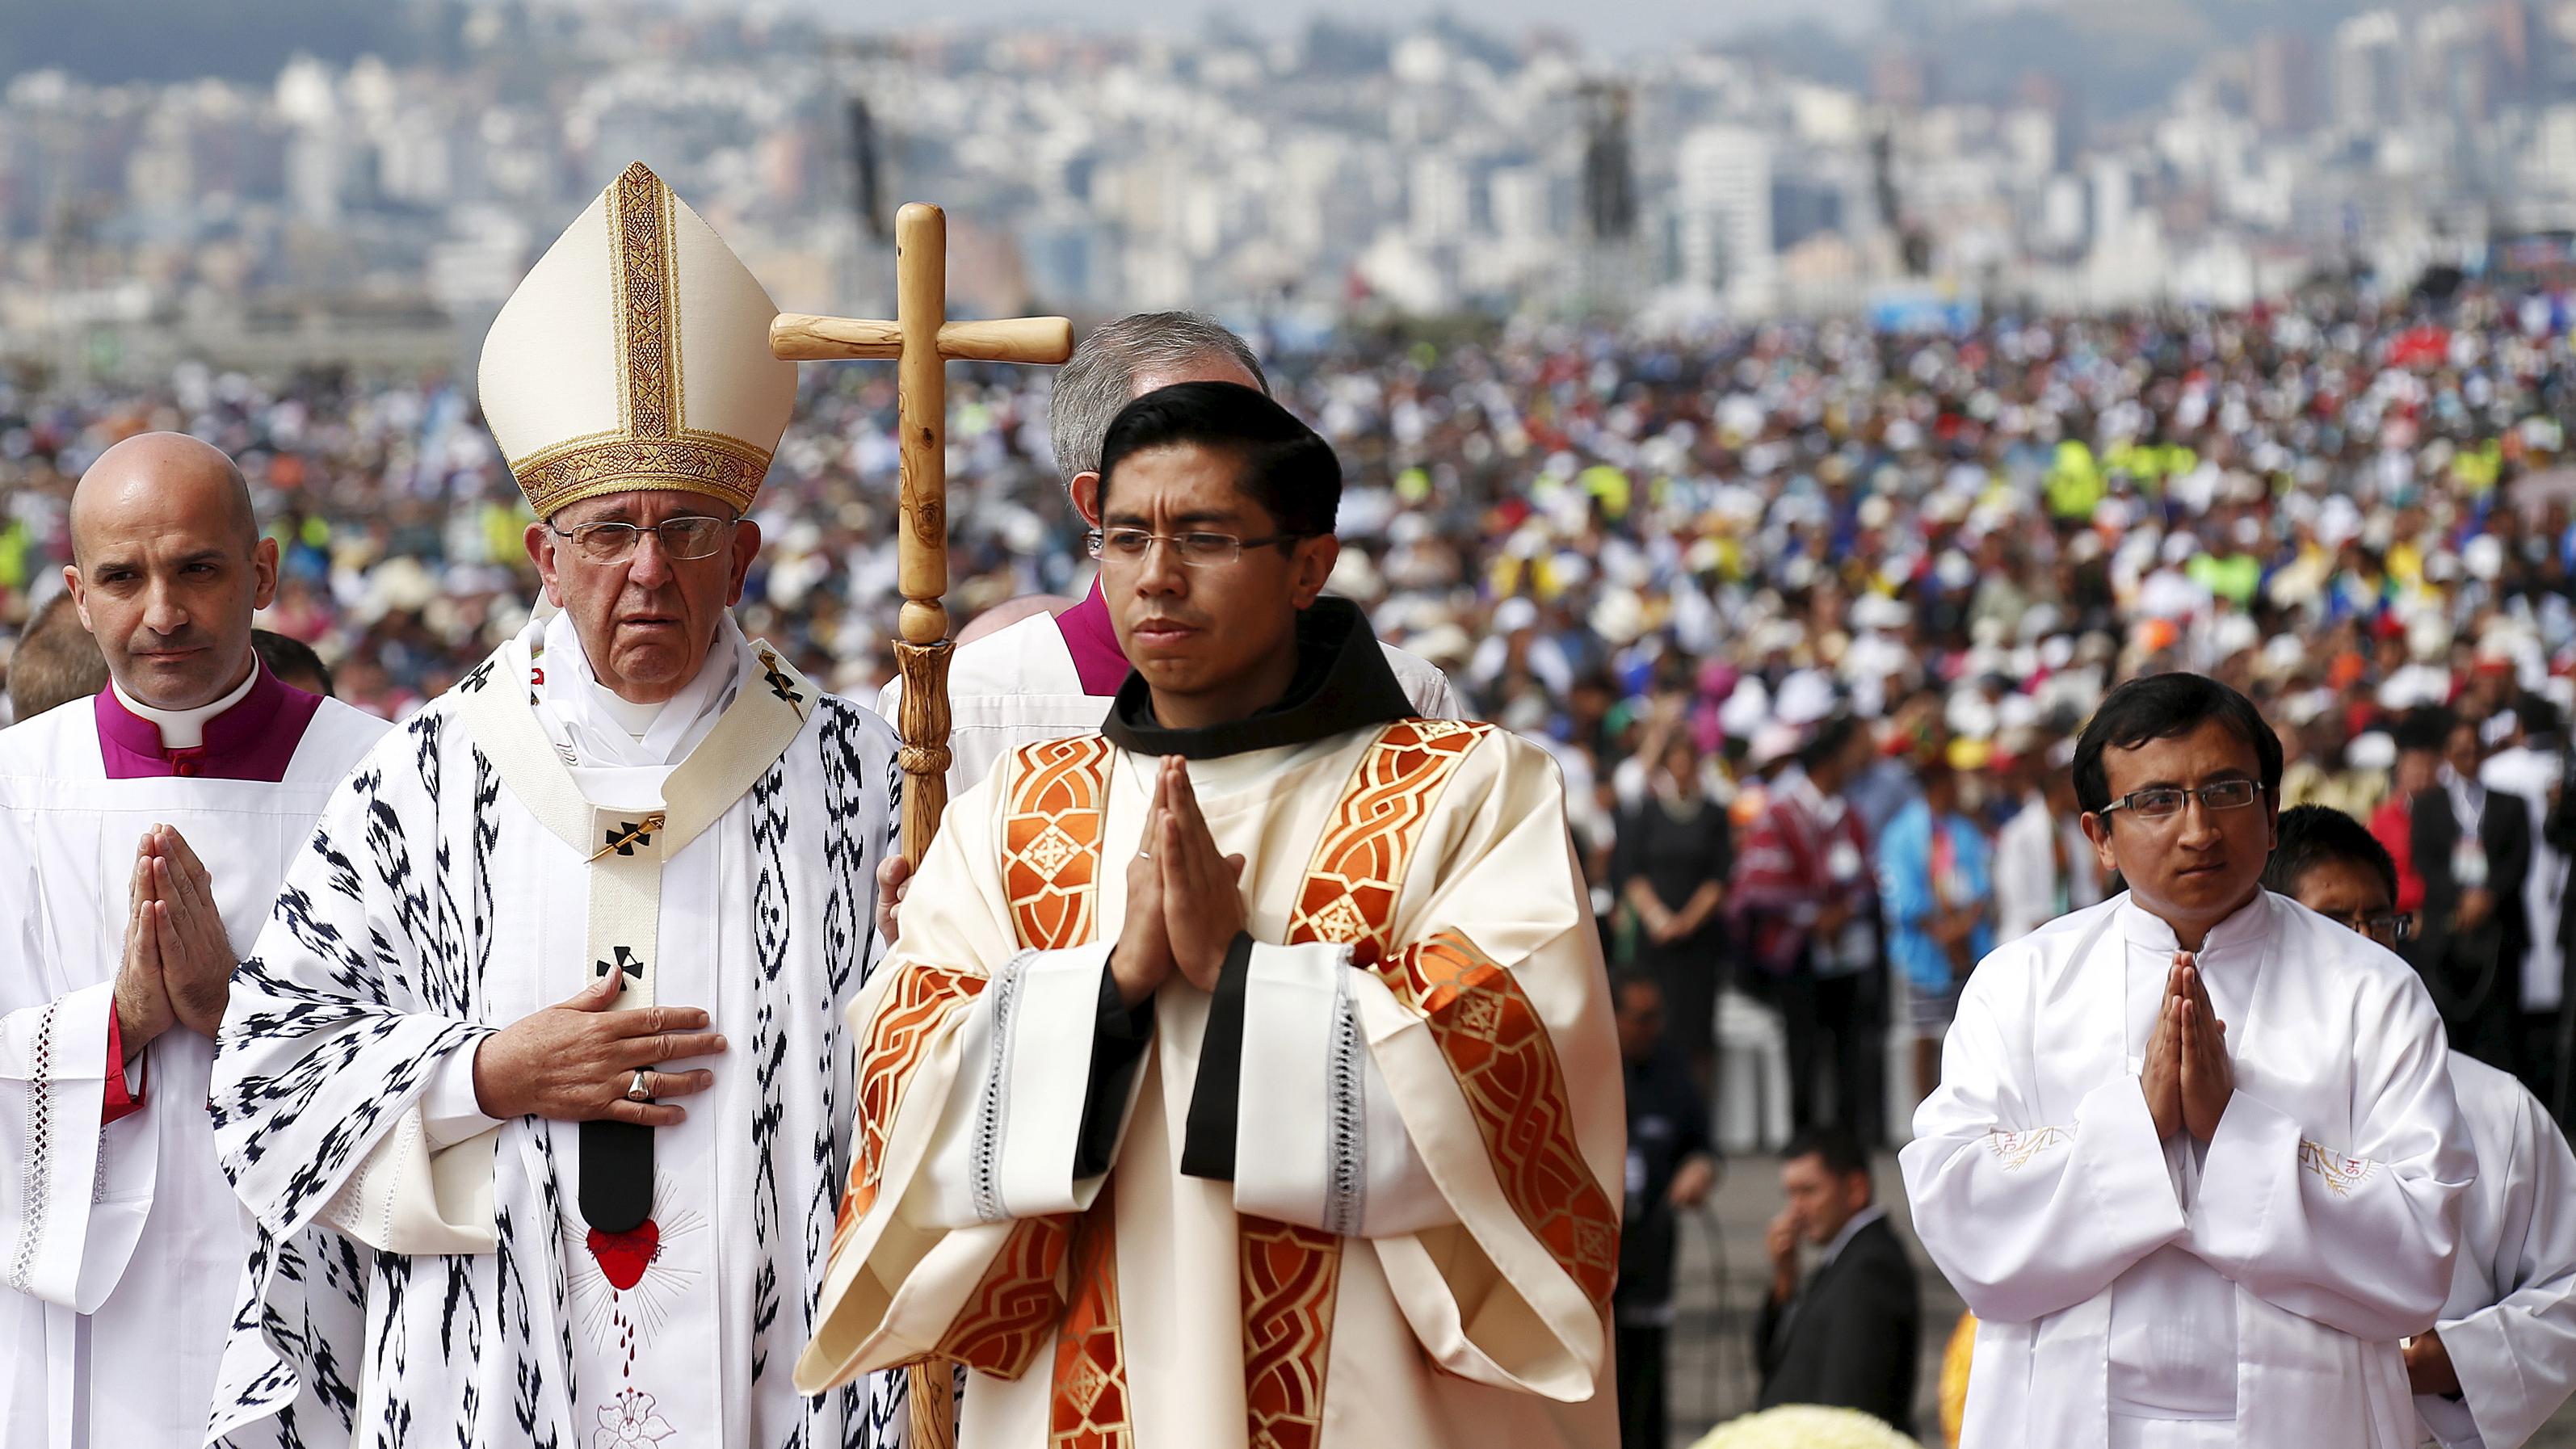 Pope Francis arrives to celebrate mass at the Bicentenario Park in Quito, Ecuador.